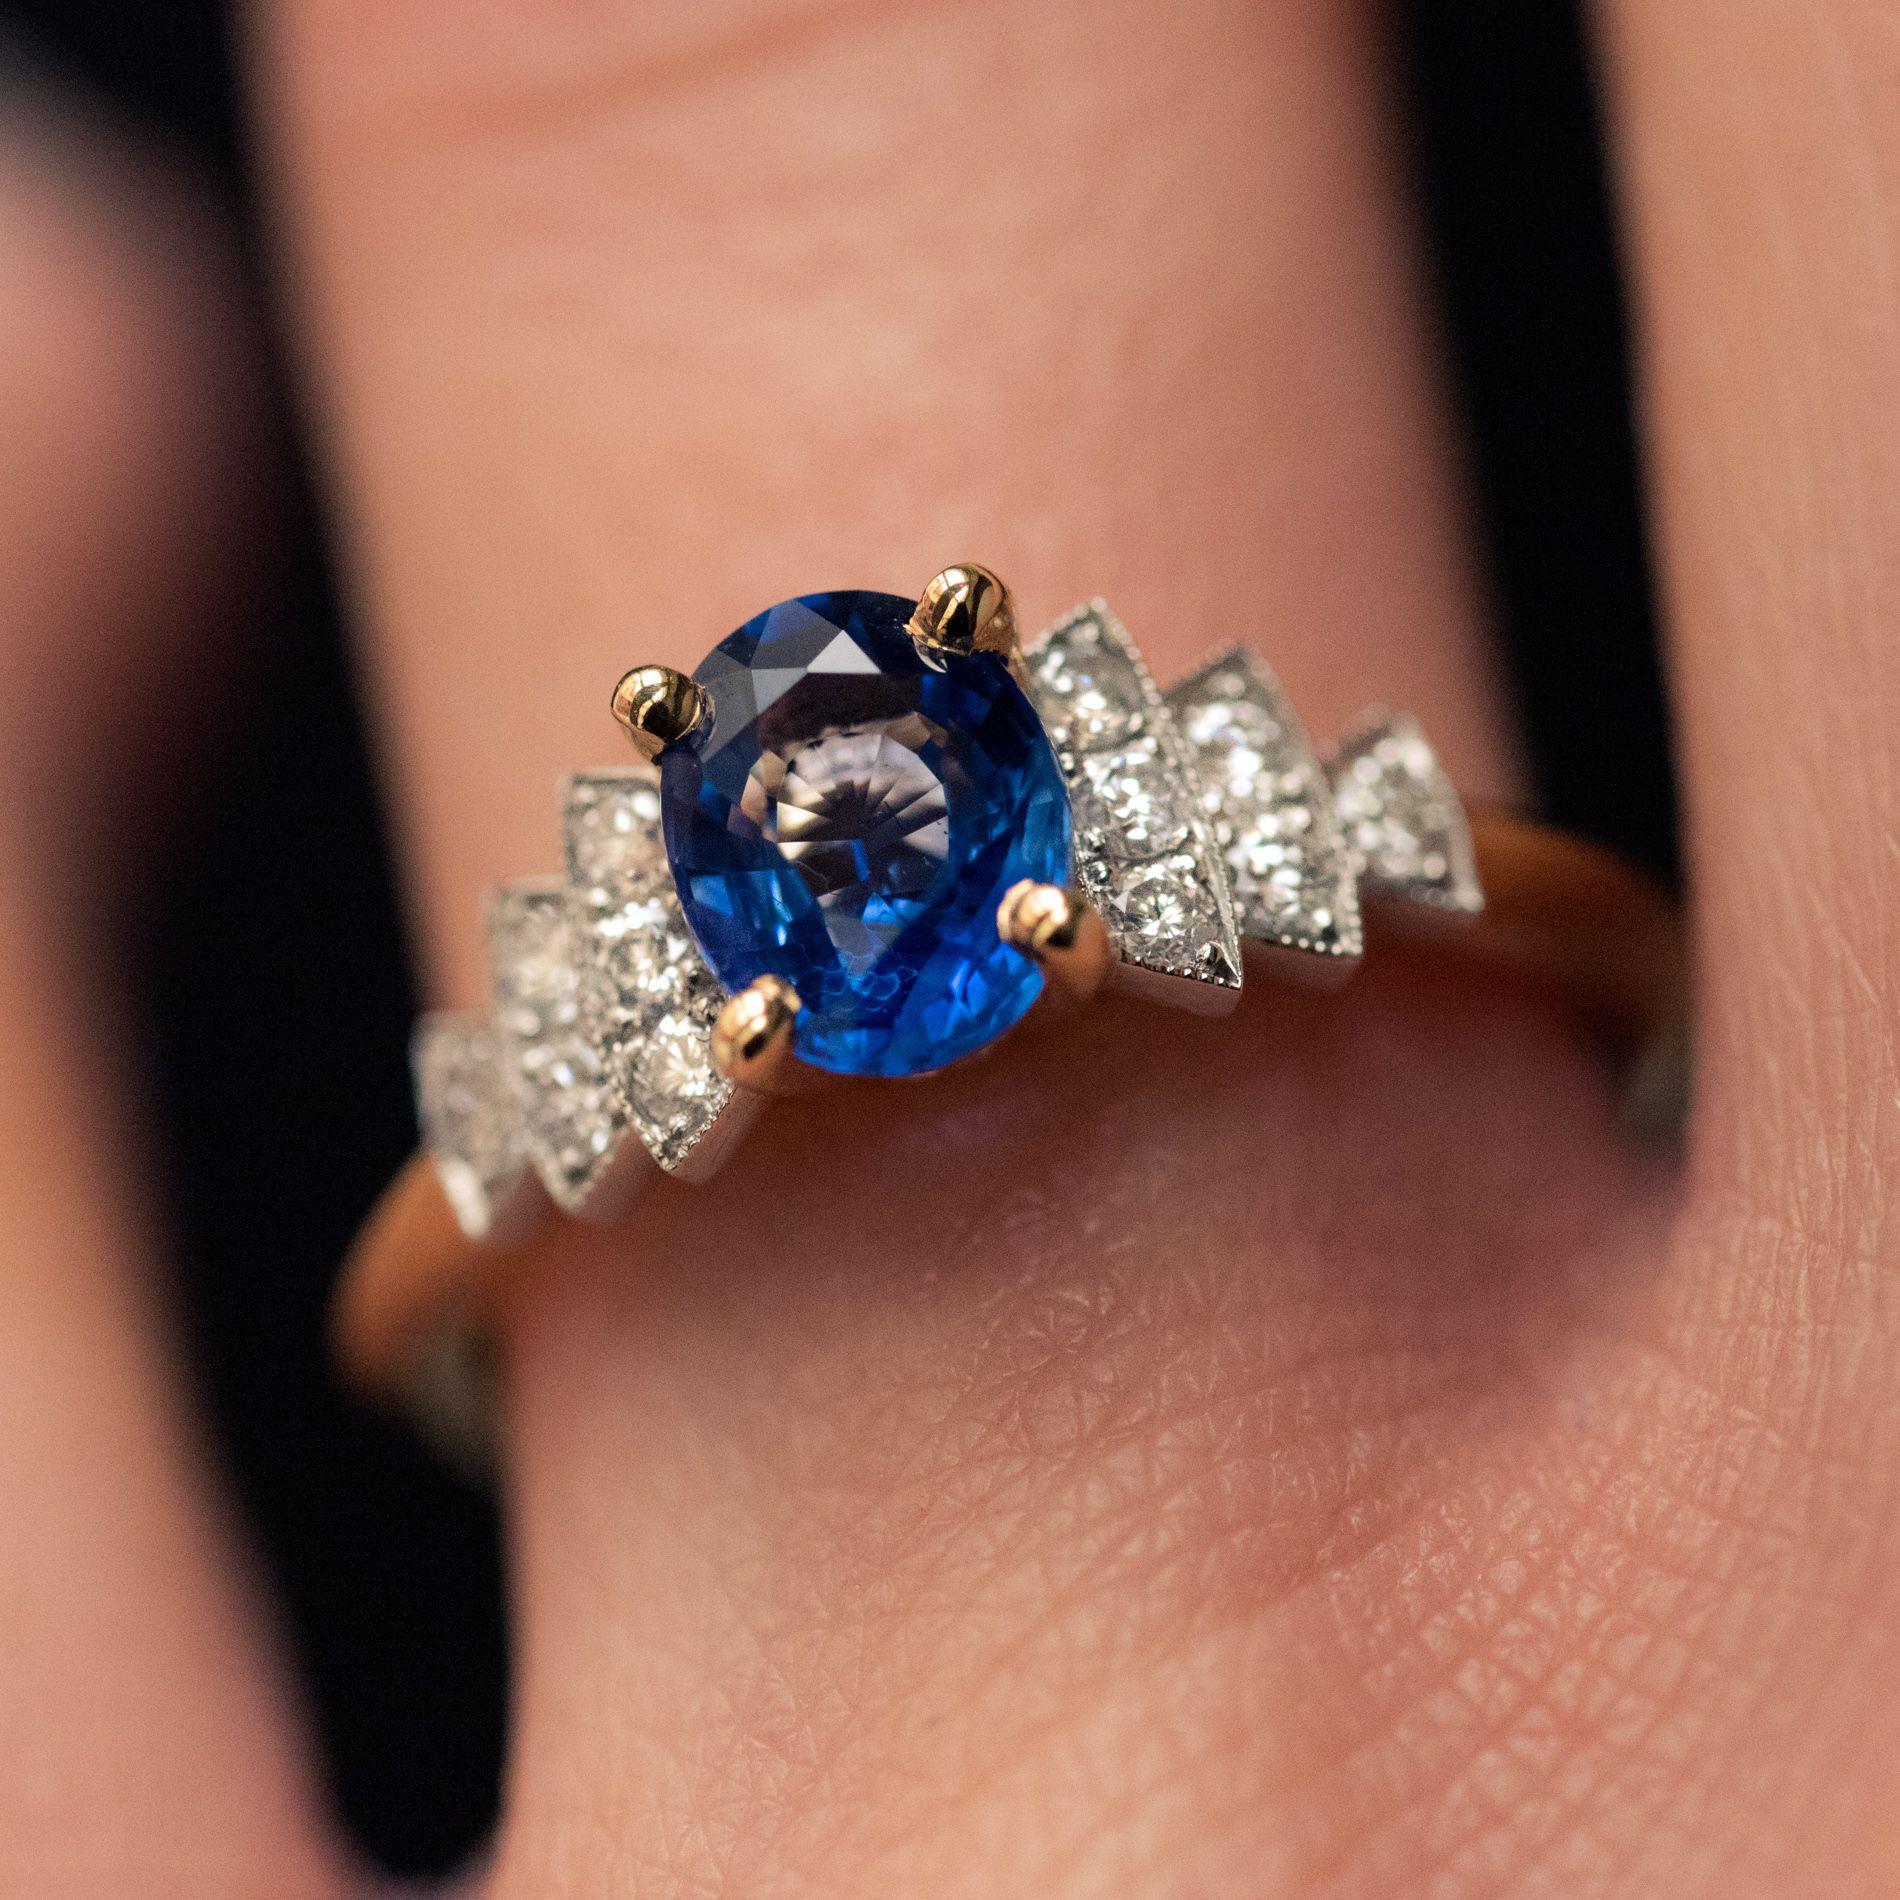 Women's French Art Deco Style Sapphire Diamonds Ring